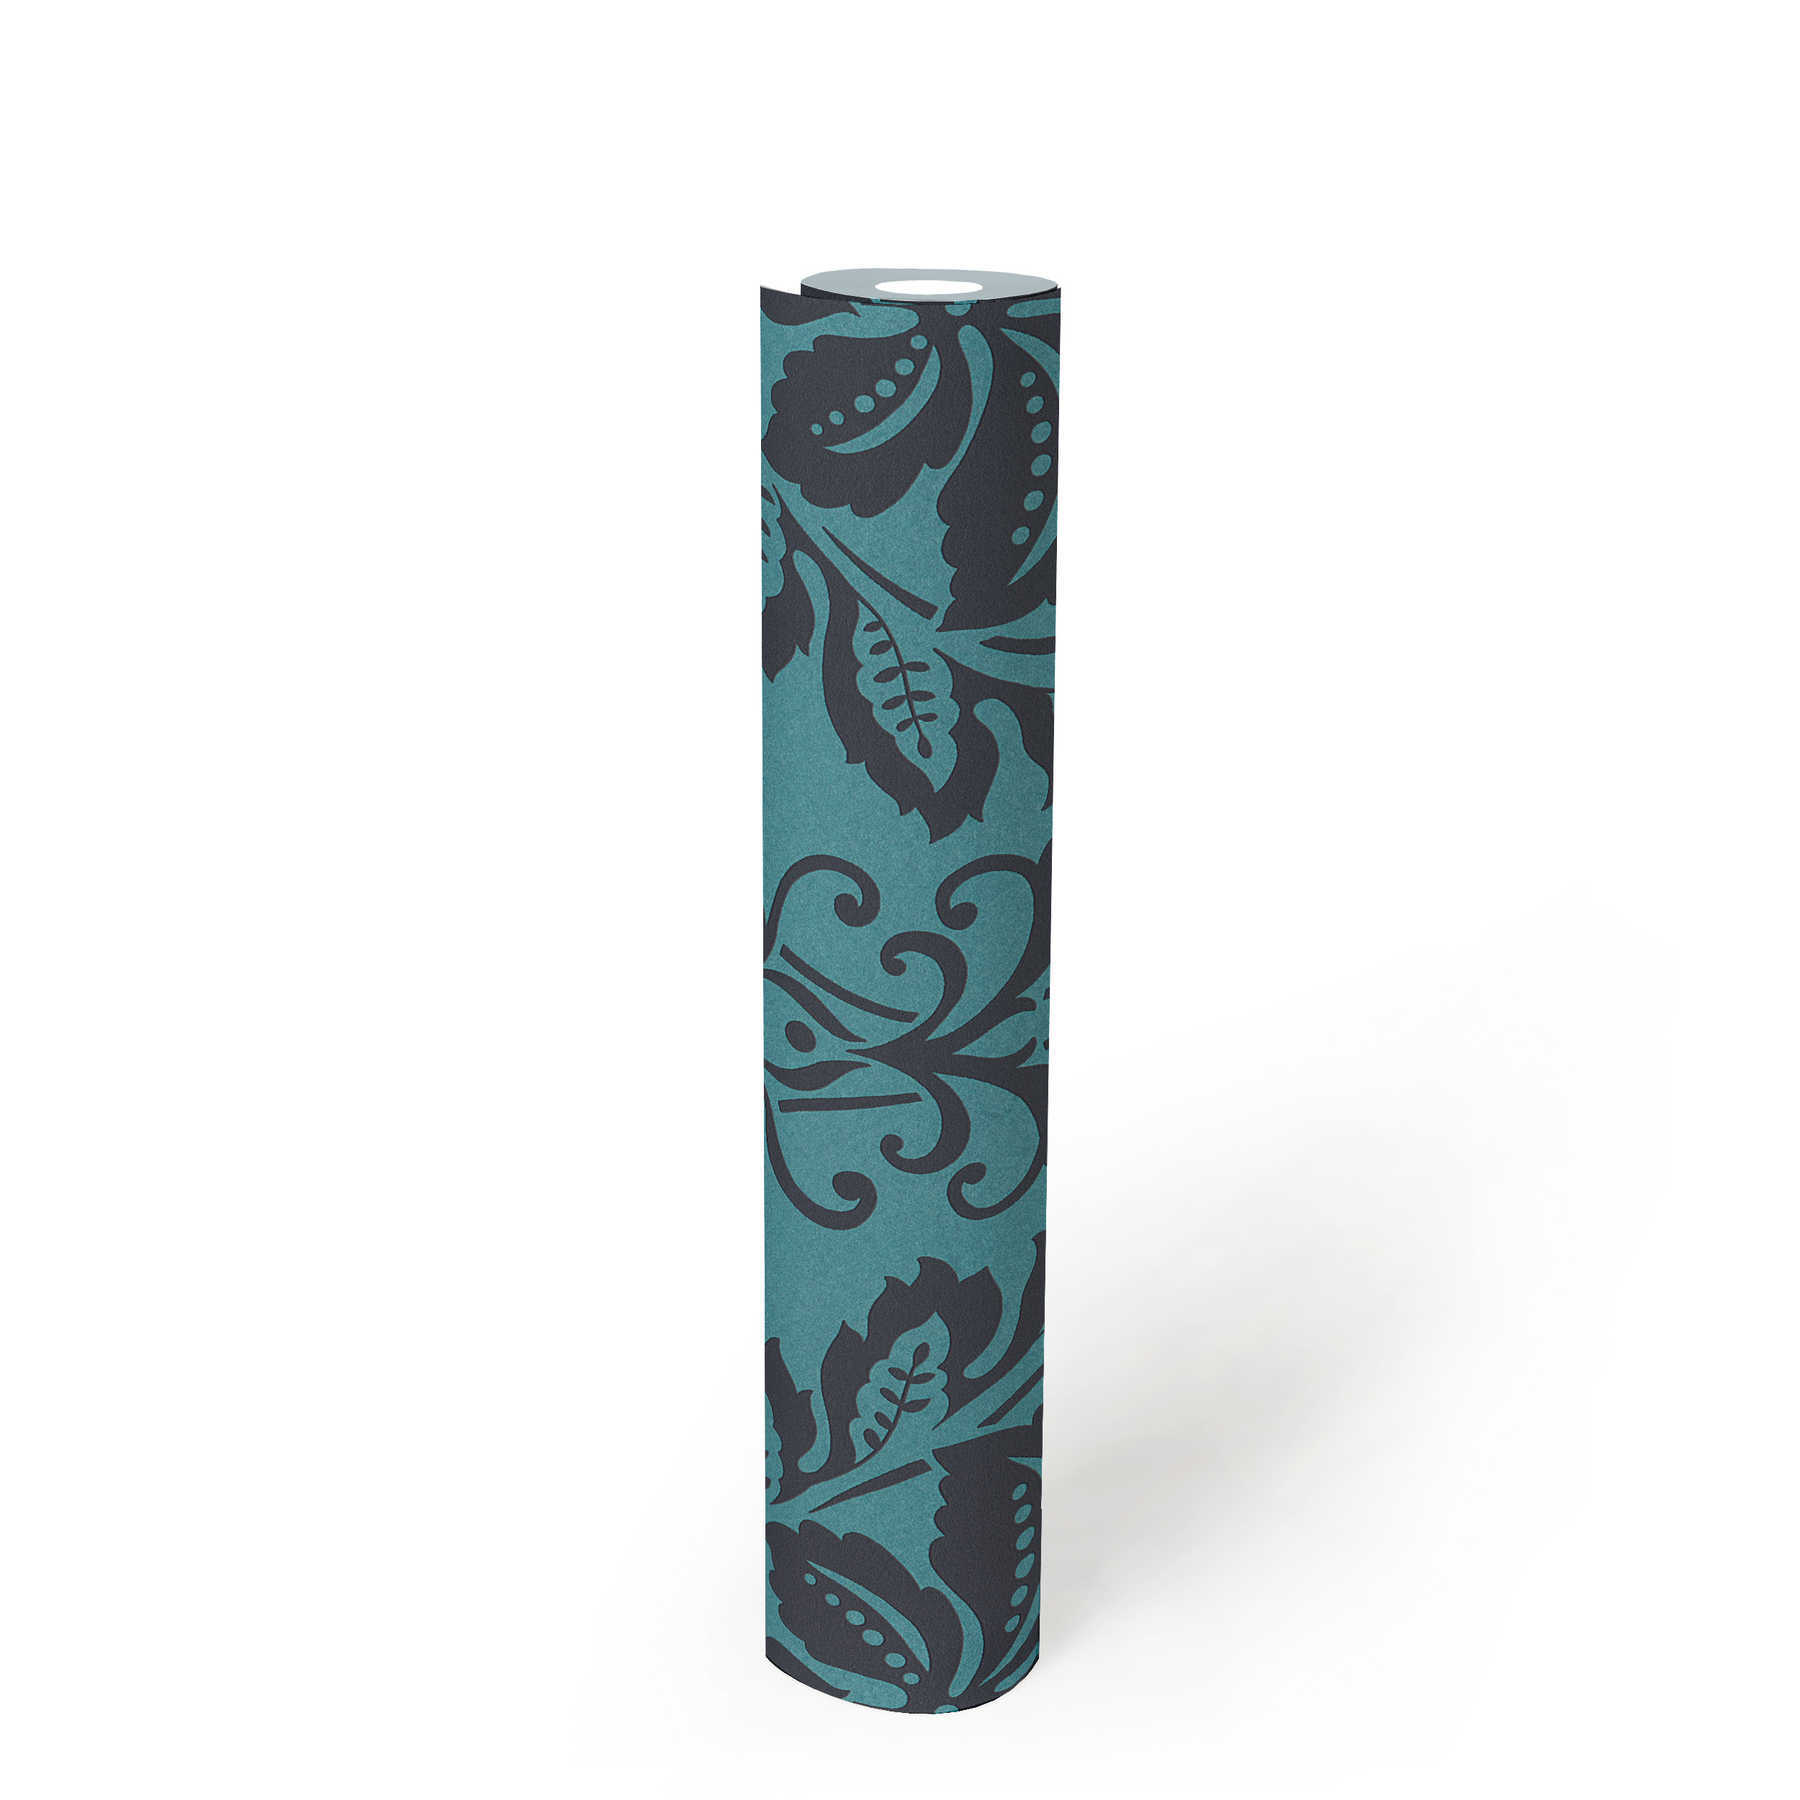             Neo-Klassik Ornament Tapete, floral – Blau, Schwarz
        